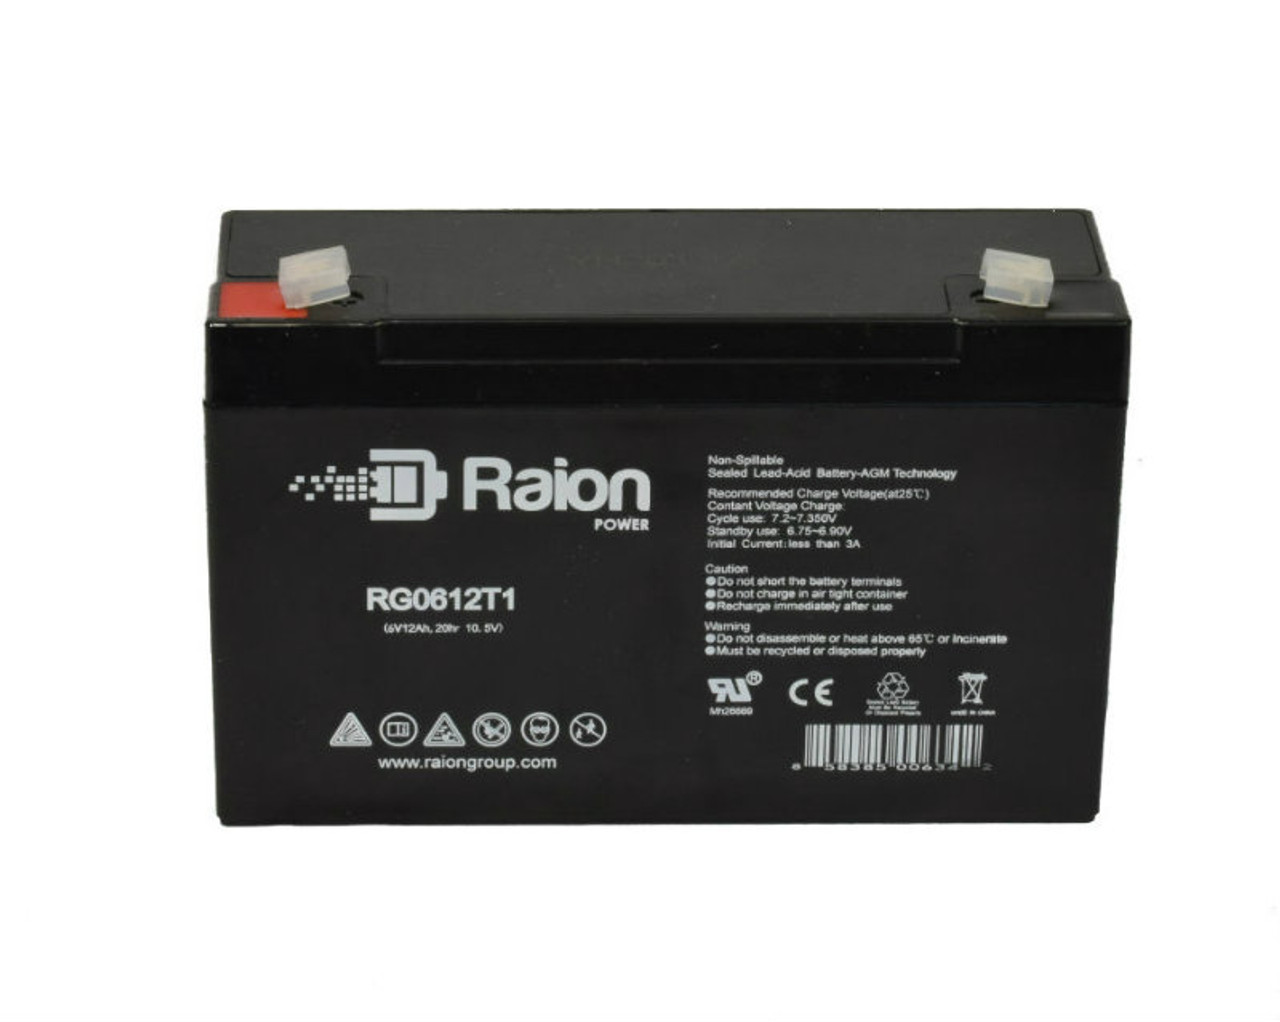 Raion Power RG06120T1 SLA Battery for Dual-Lite 0120800 / 12-800